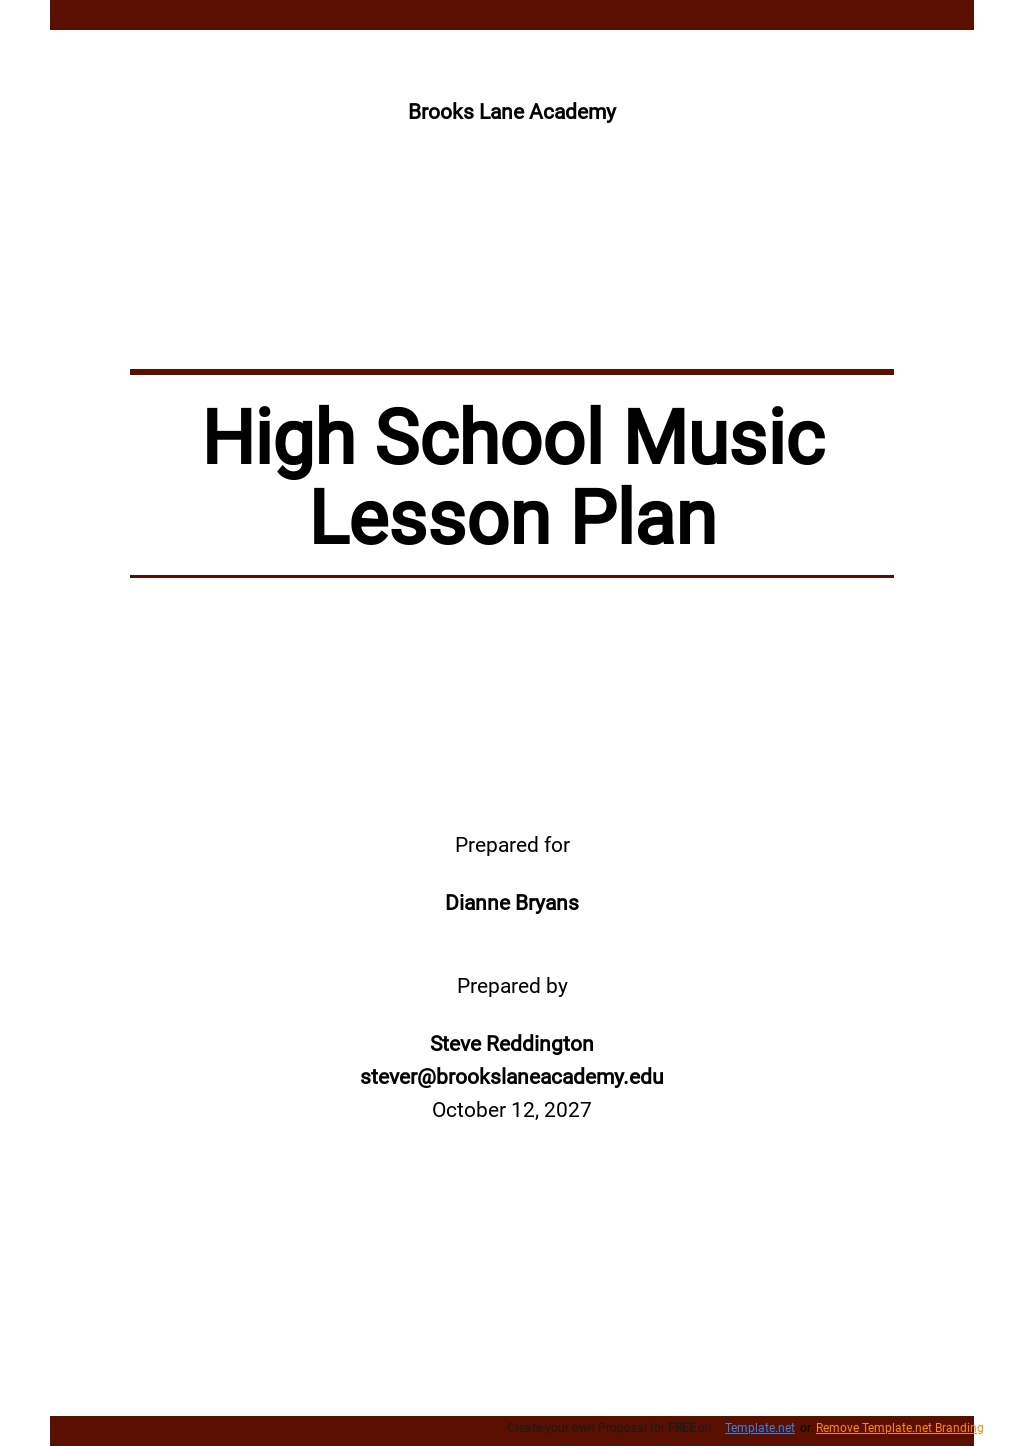 High School Music Lesson Plan Template